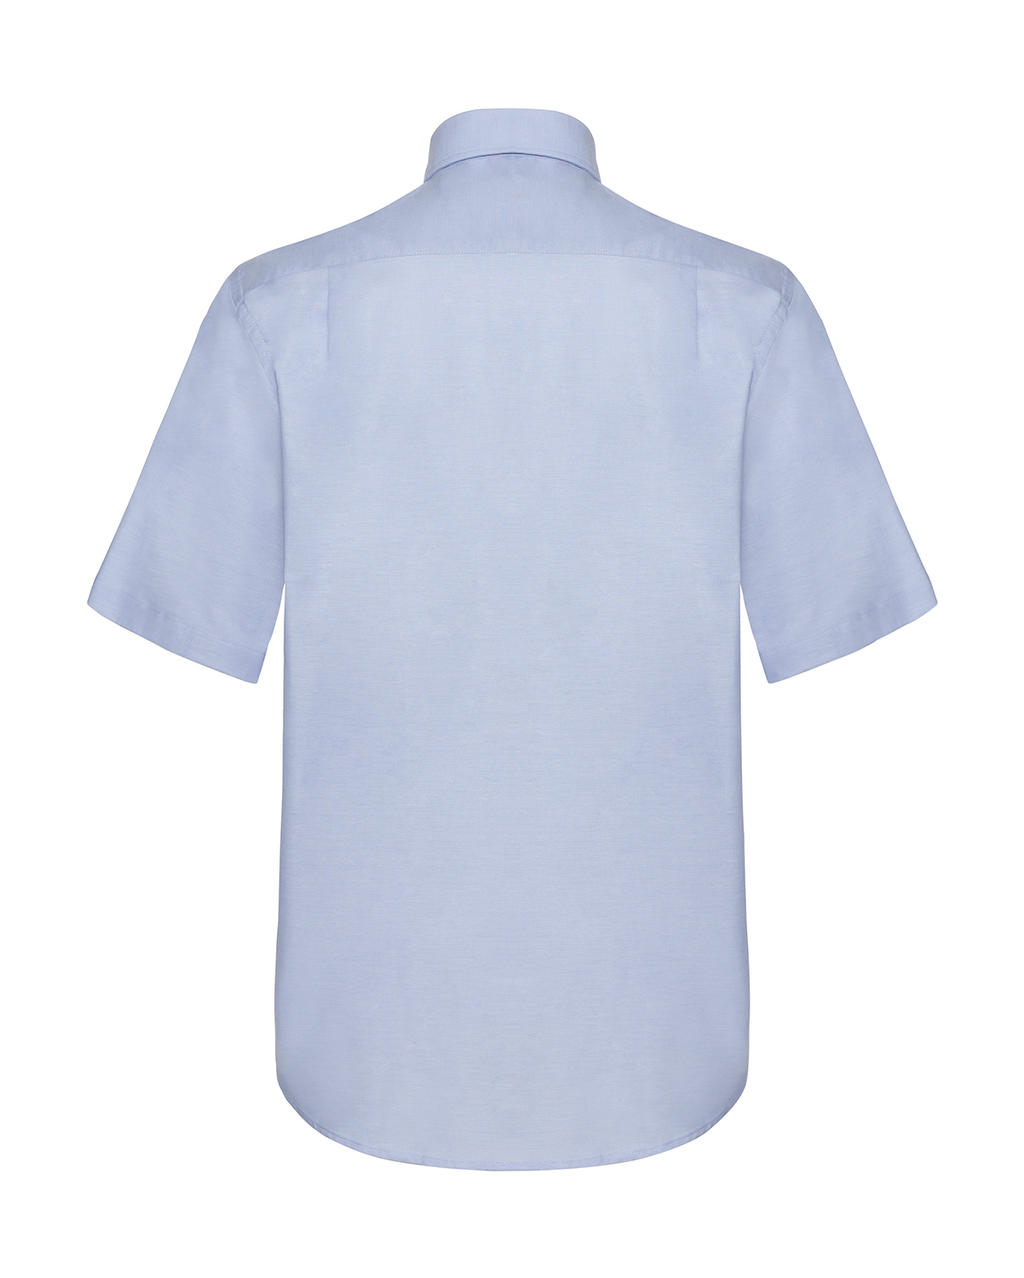 Oxford Shirt Short Sleeve